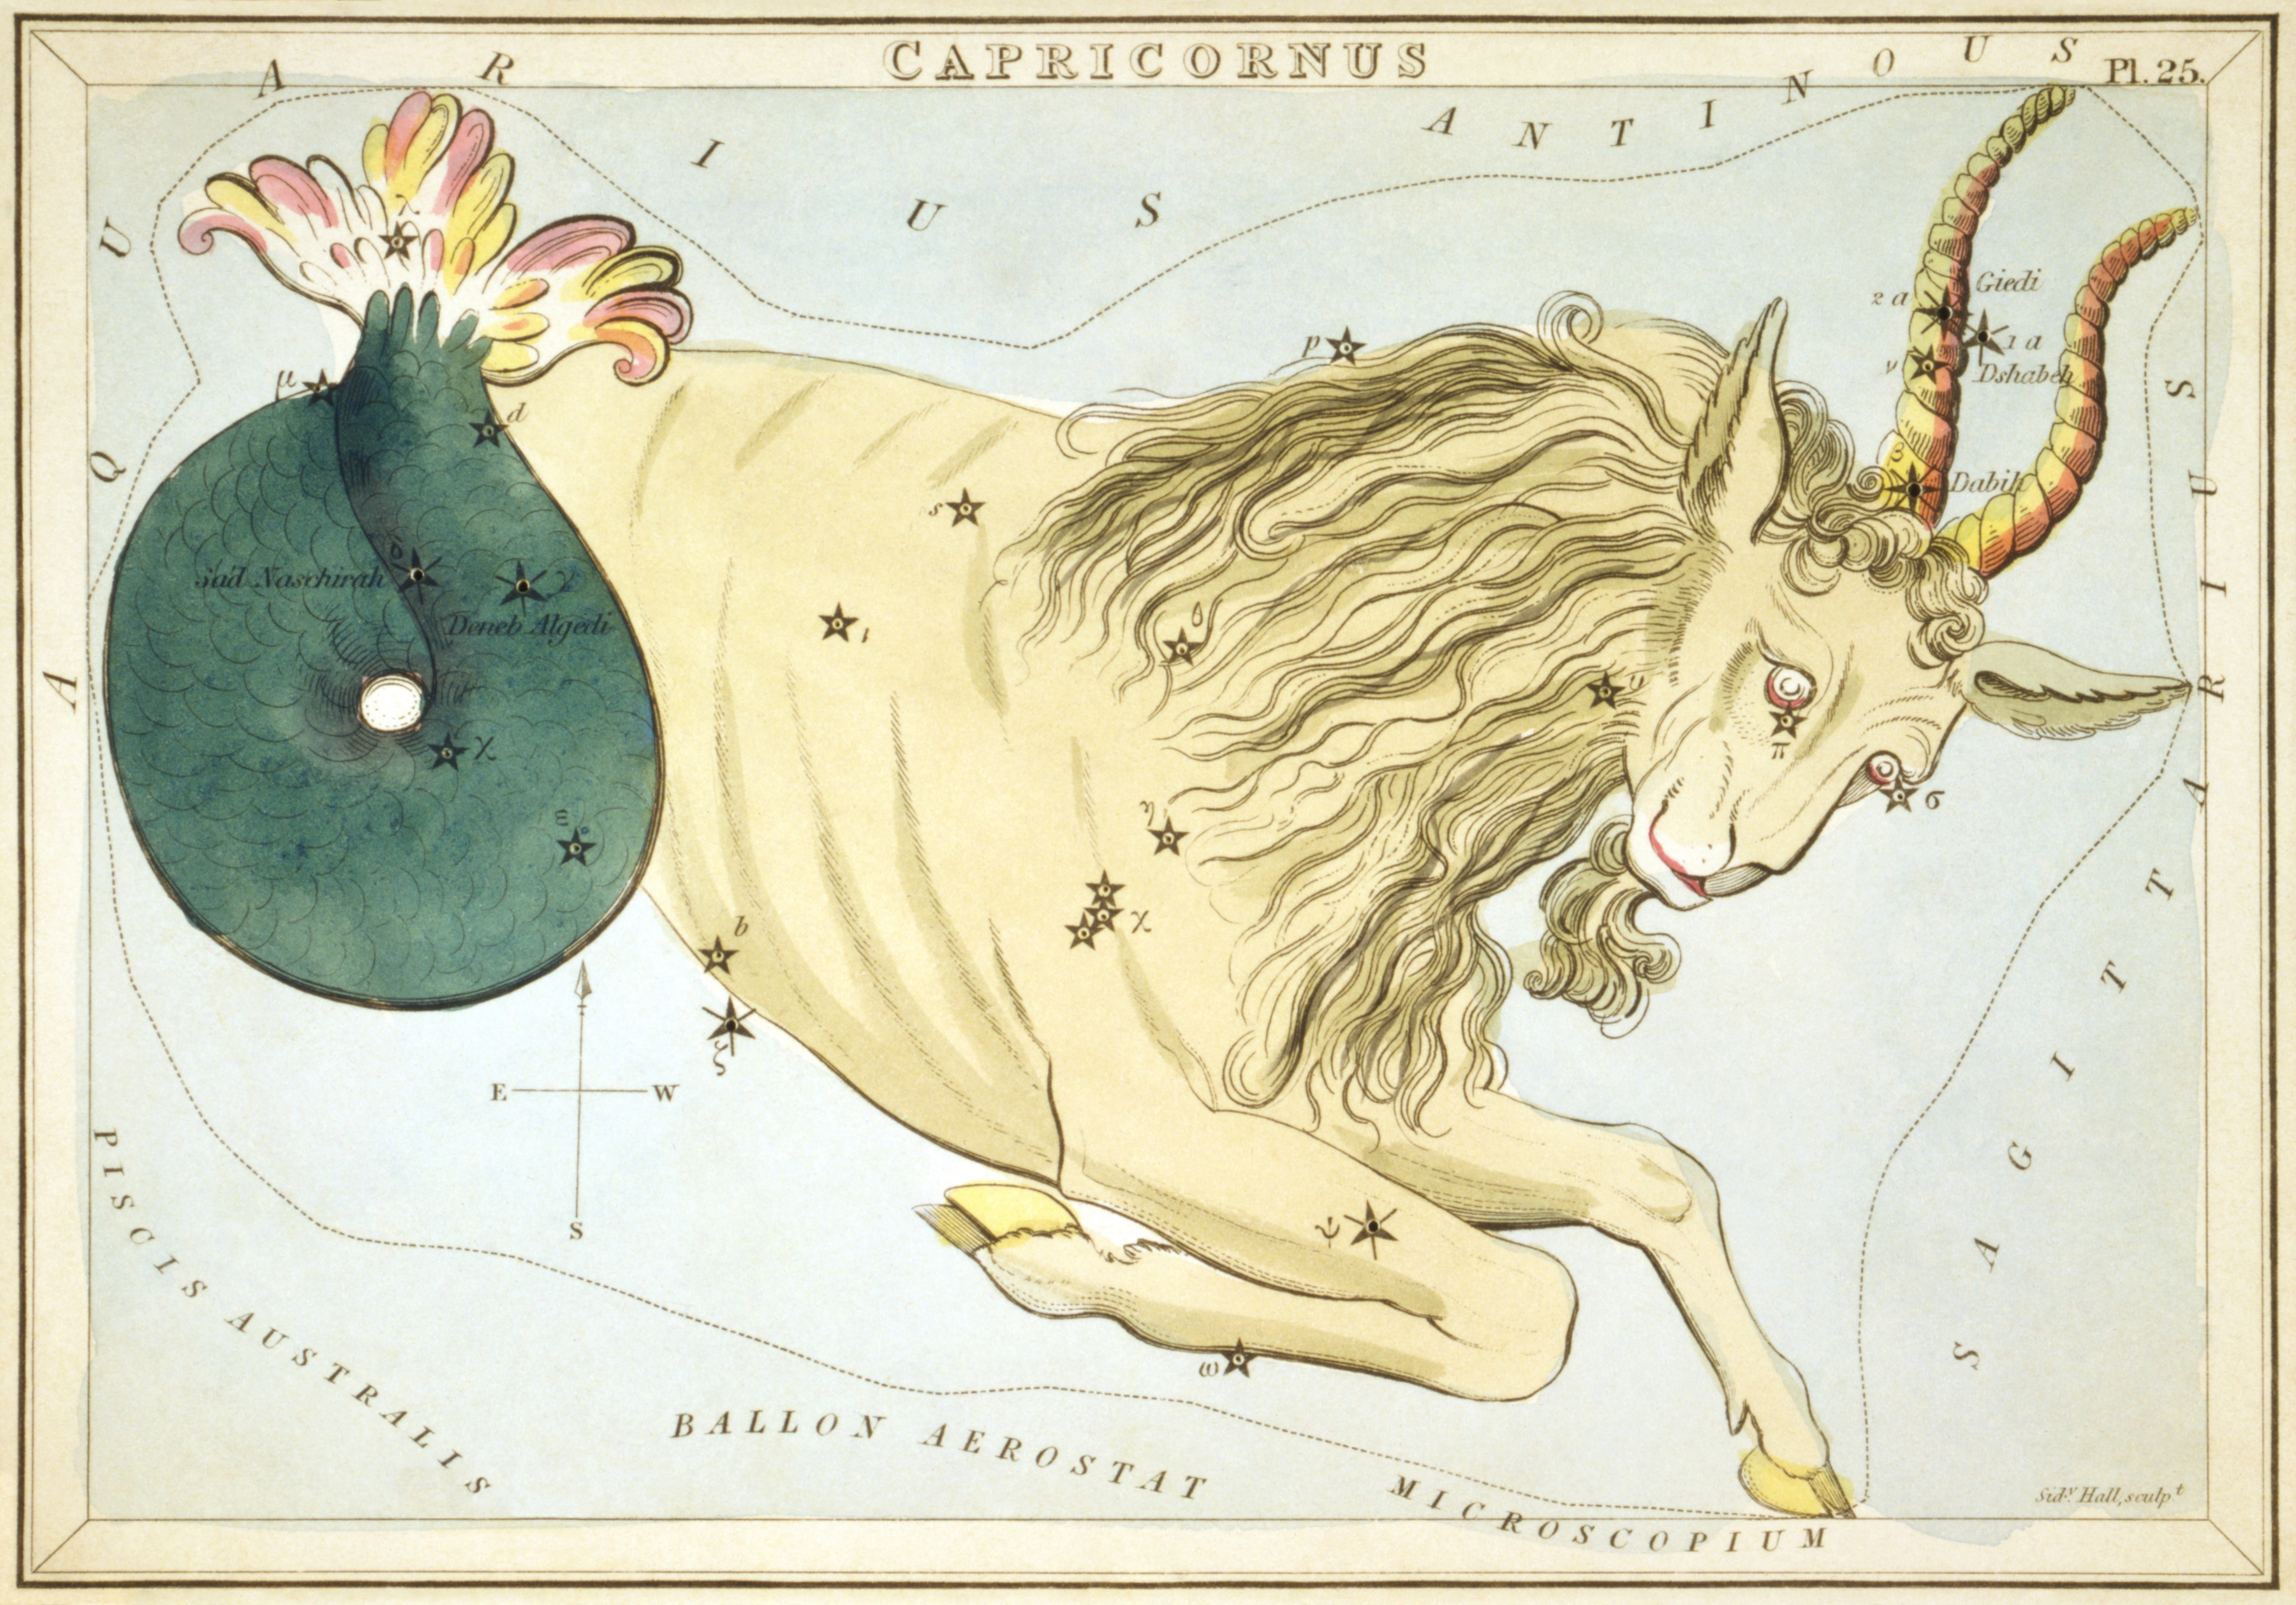 Capricornus CAPricornus is the a.k.a. the "sea-GOAT," who/witch is half-GOAT, half-fish.